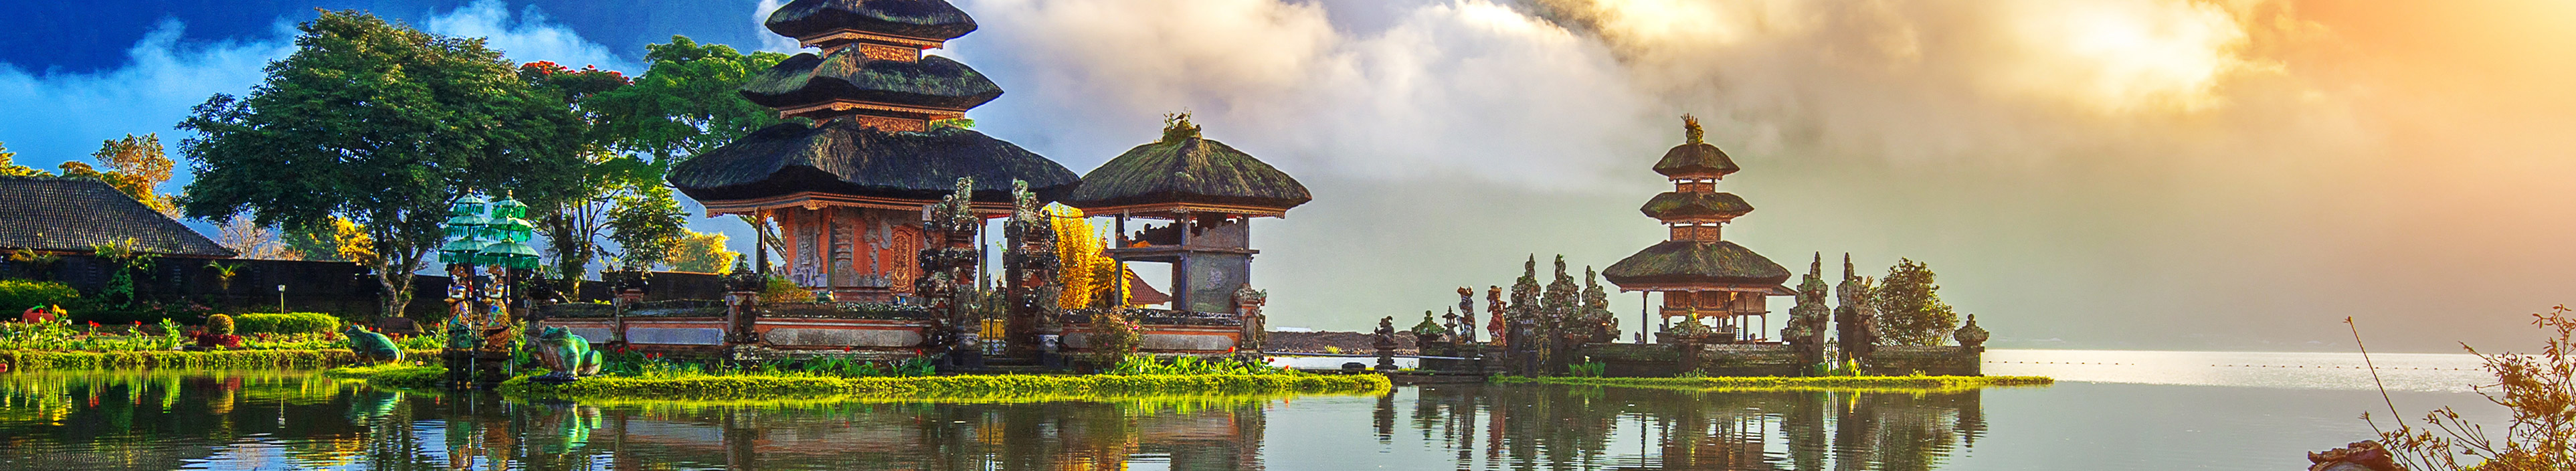 Urlaub Bali.Der Pura Ulun Danu Bratan Wassertempel.